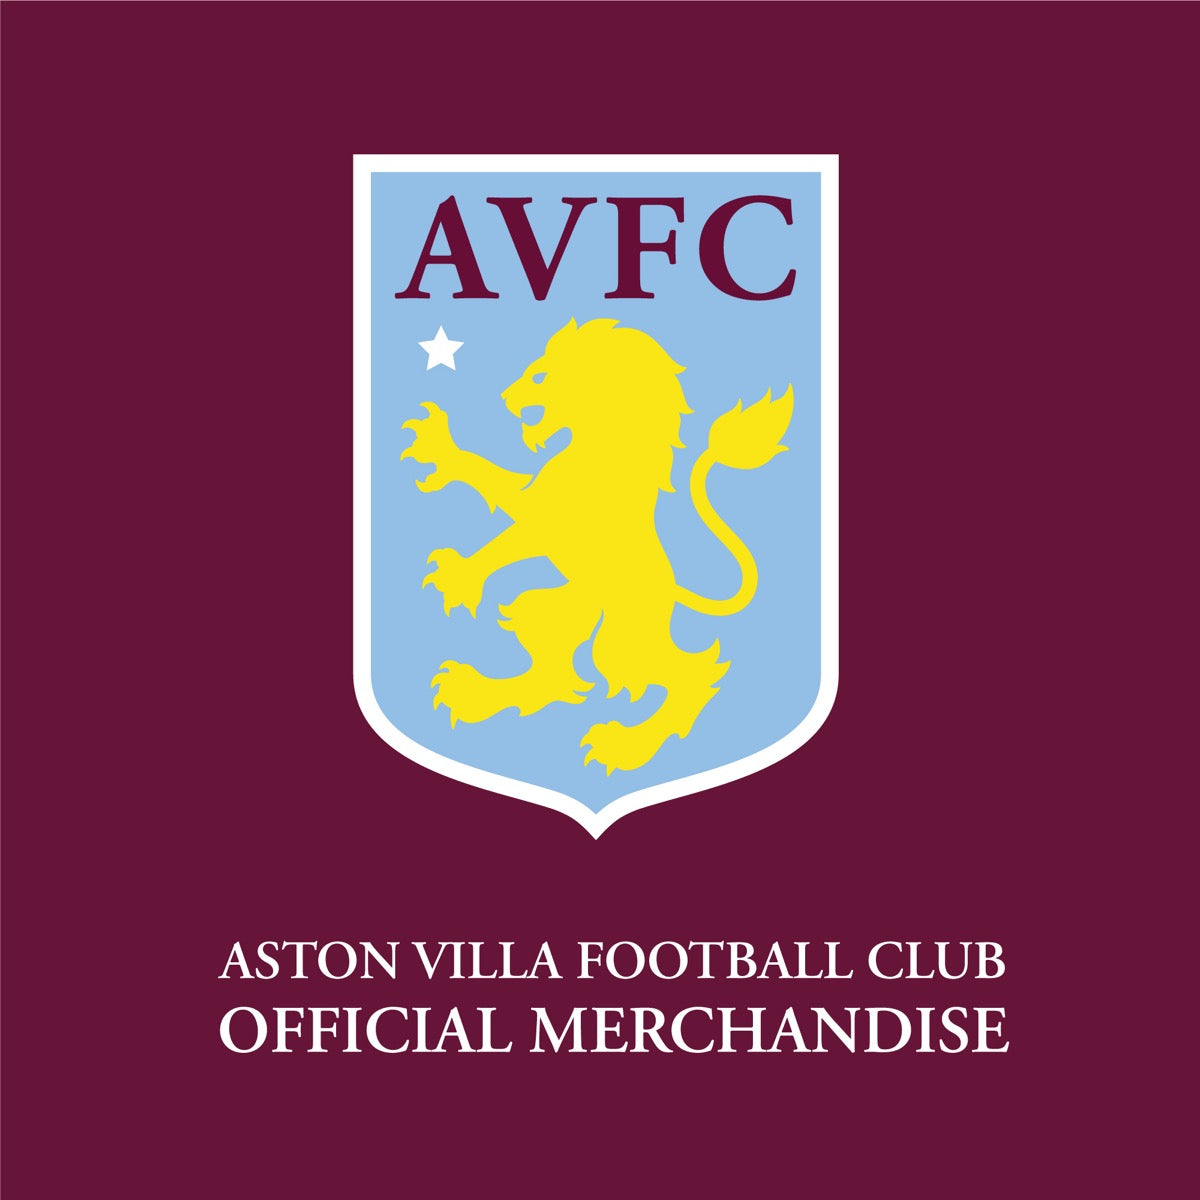 Aston Villa Football Club - McGinn 23-24 Wall Sticker + AVFC Decals